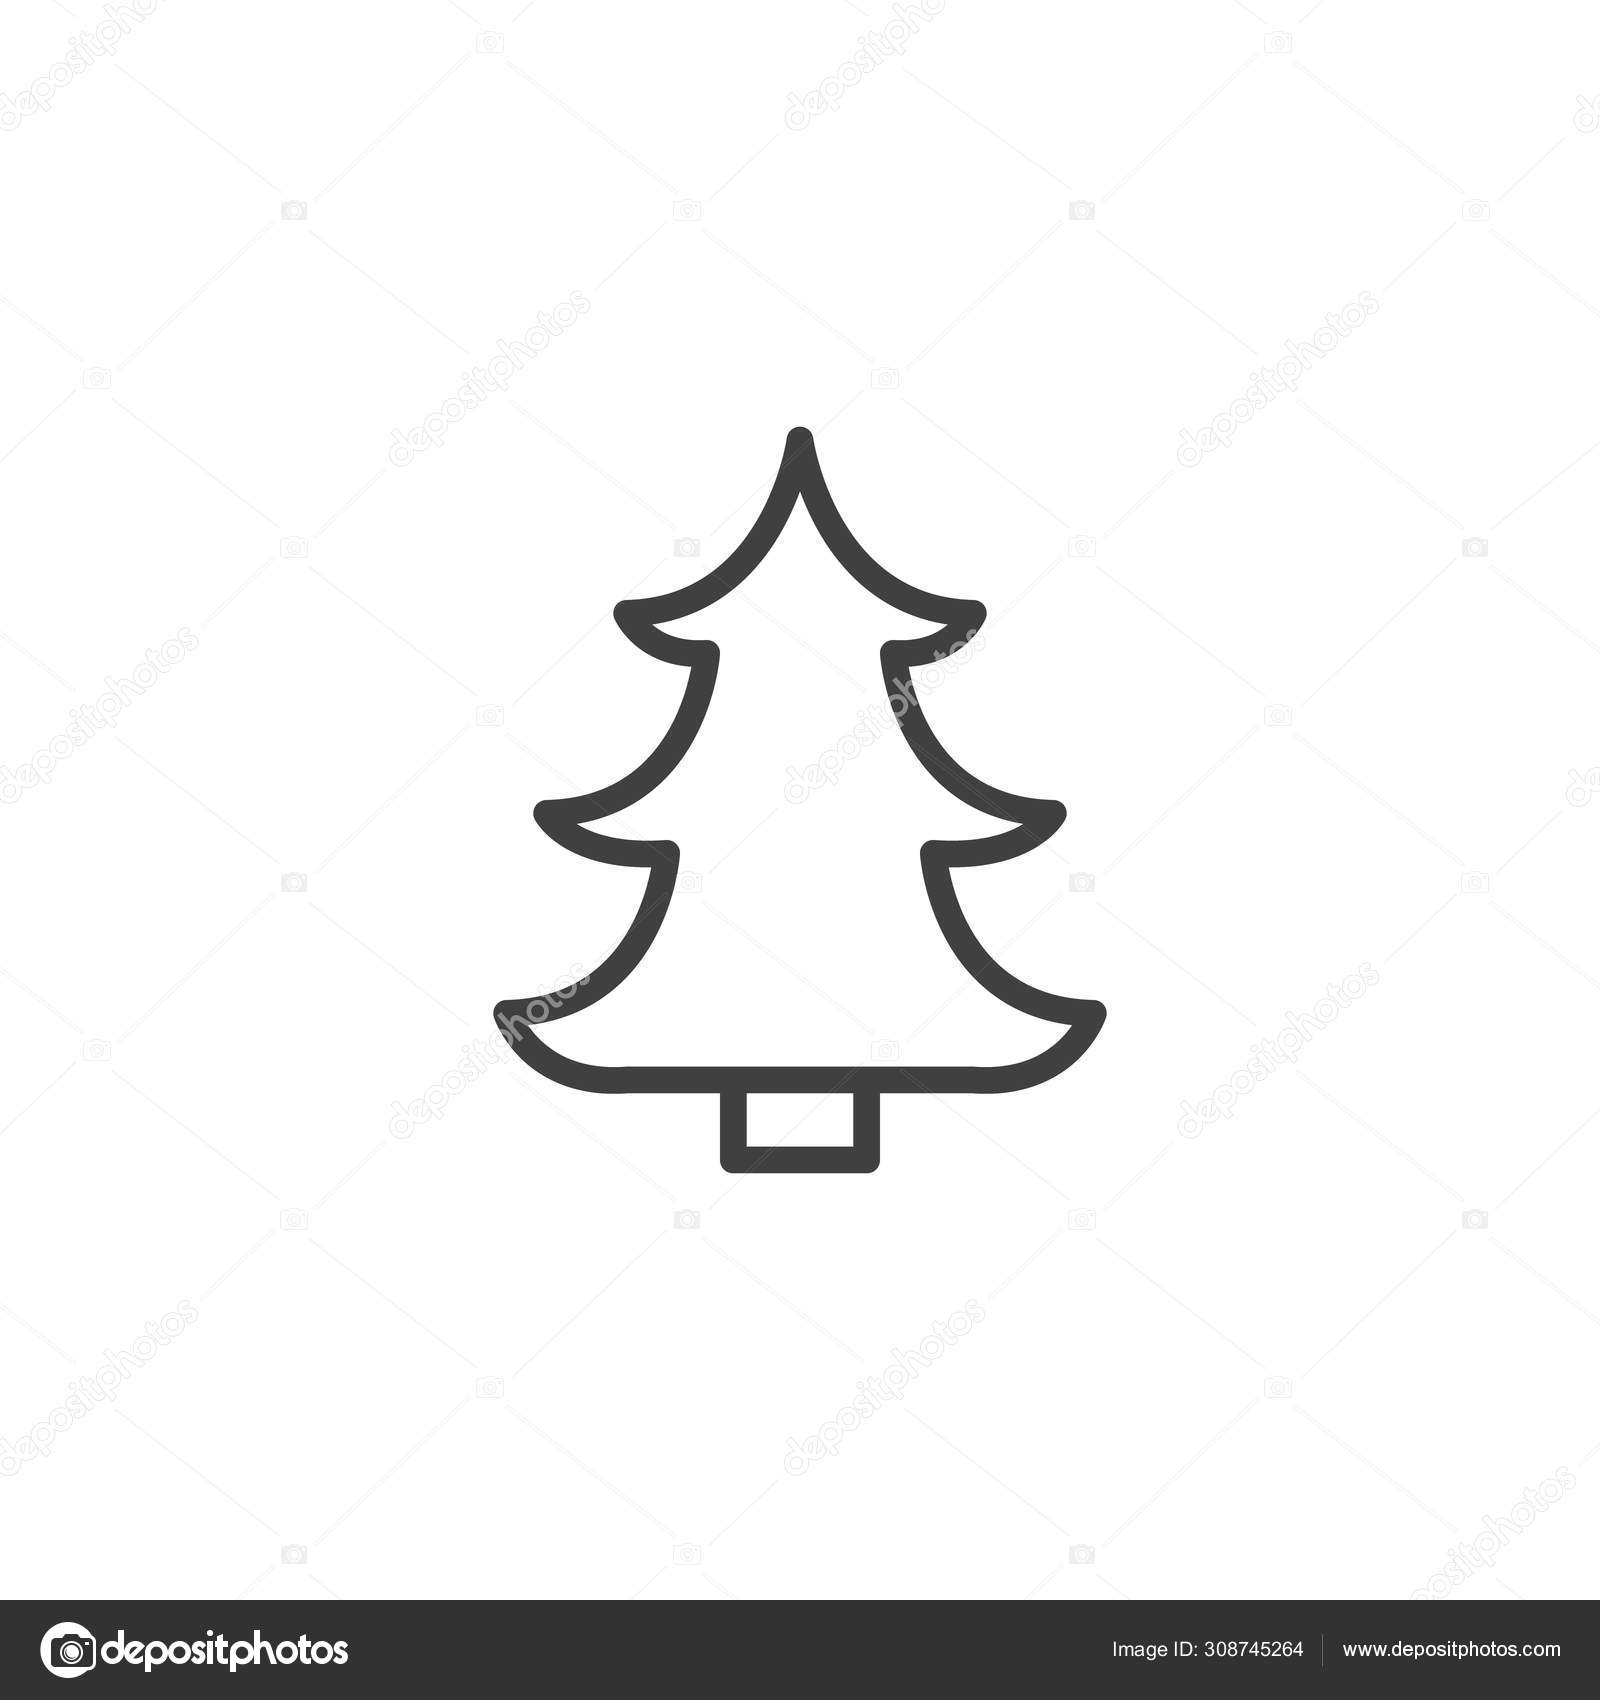 Weihnachtsbaum Ikone Vektorgrafik Lizenzfreie Grafiken C Avicons Depositphotos